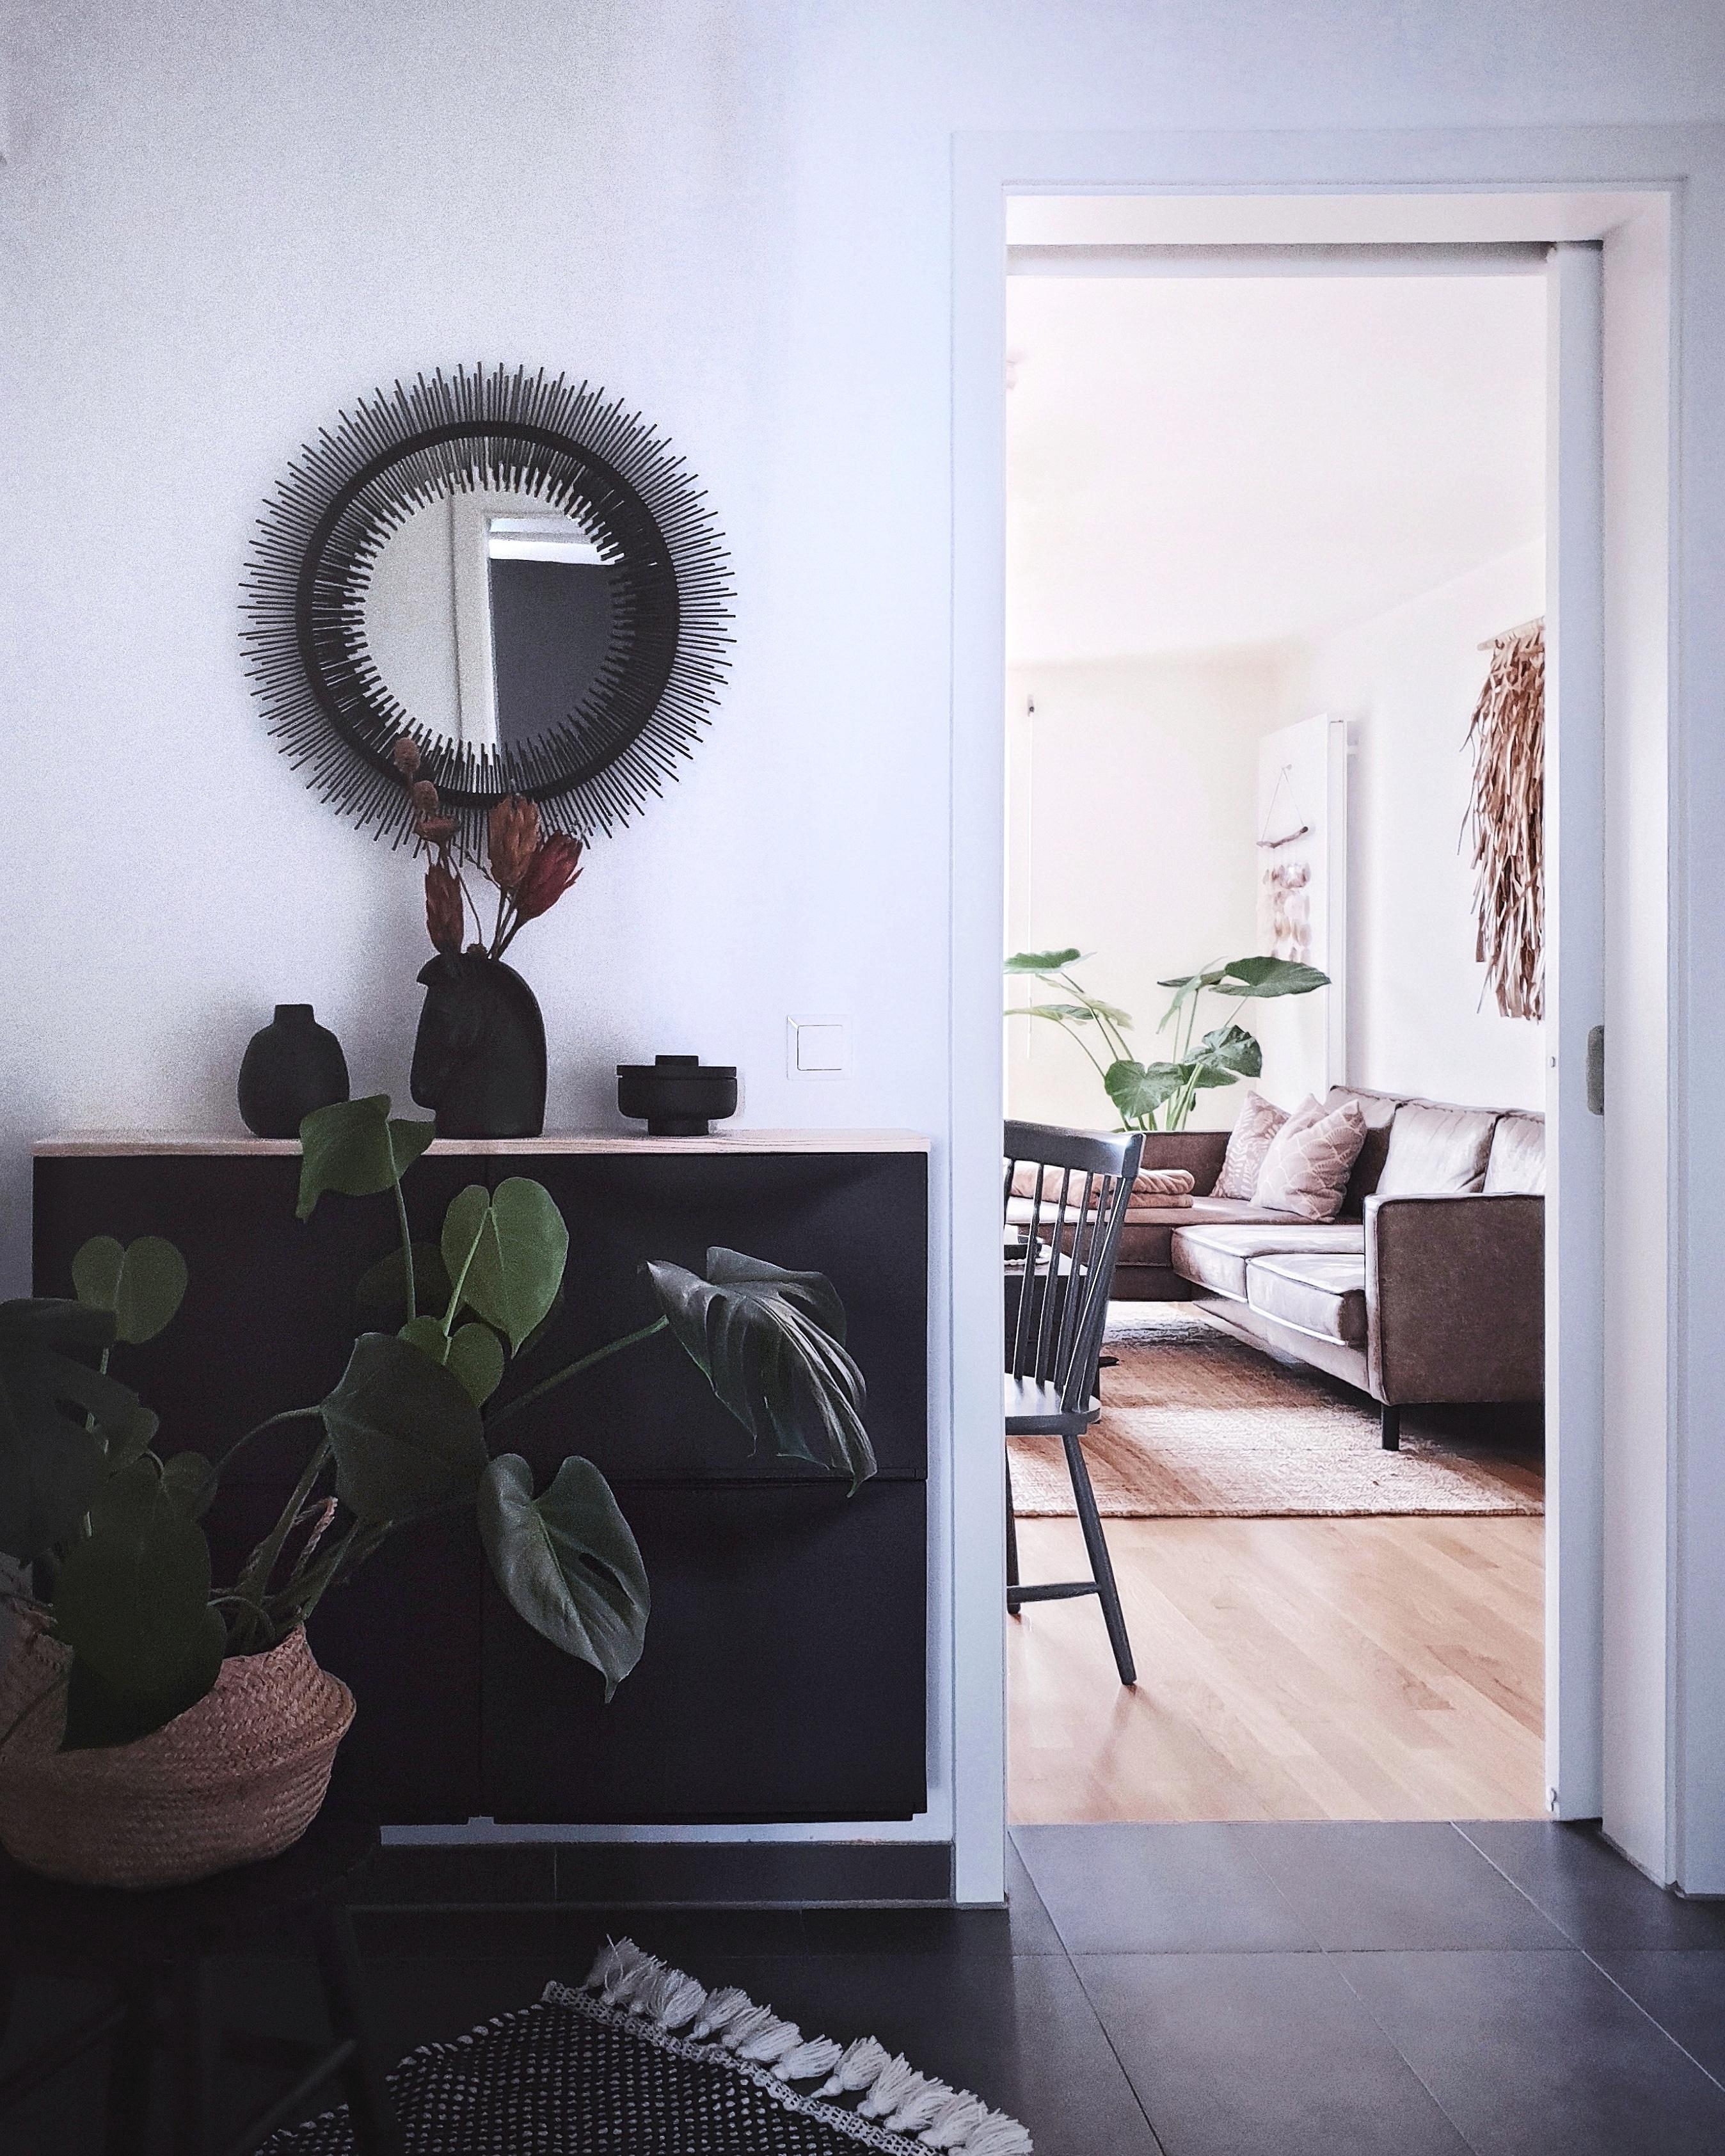 Welcome 🌿
#homedetails #homeinspiration #entrancedecor #plants